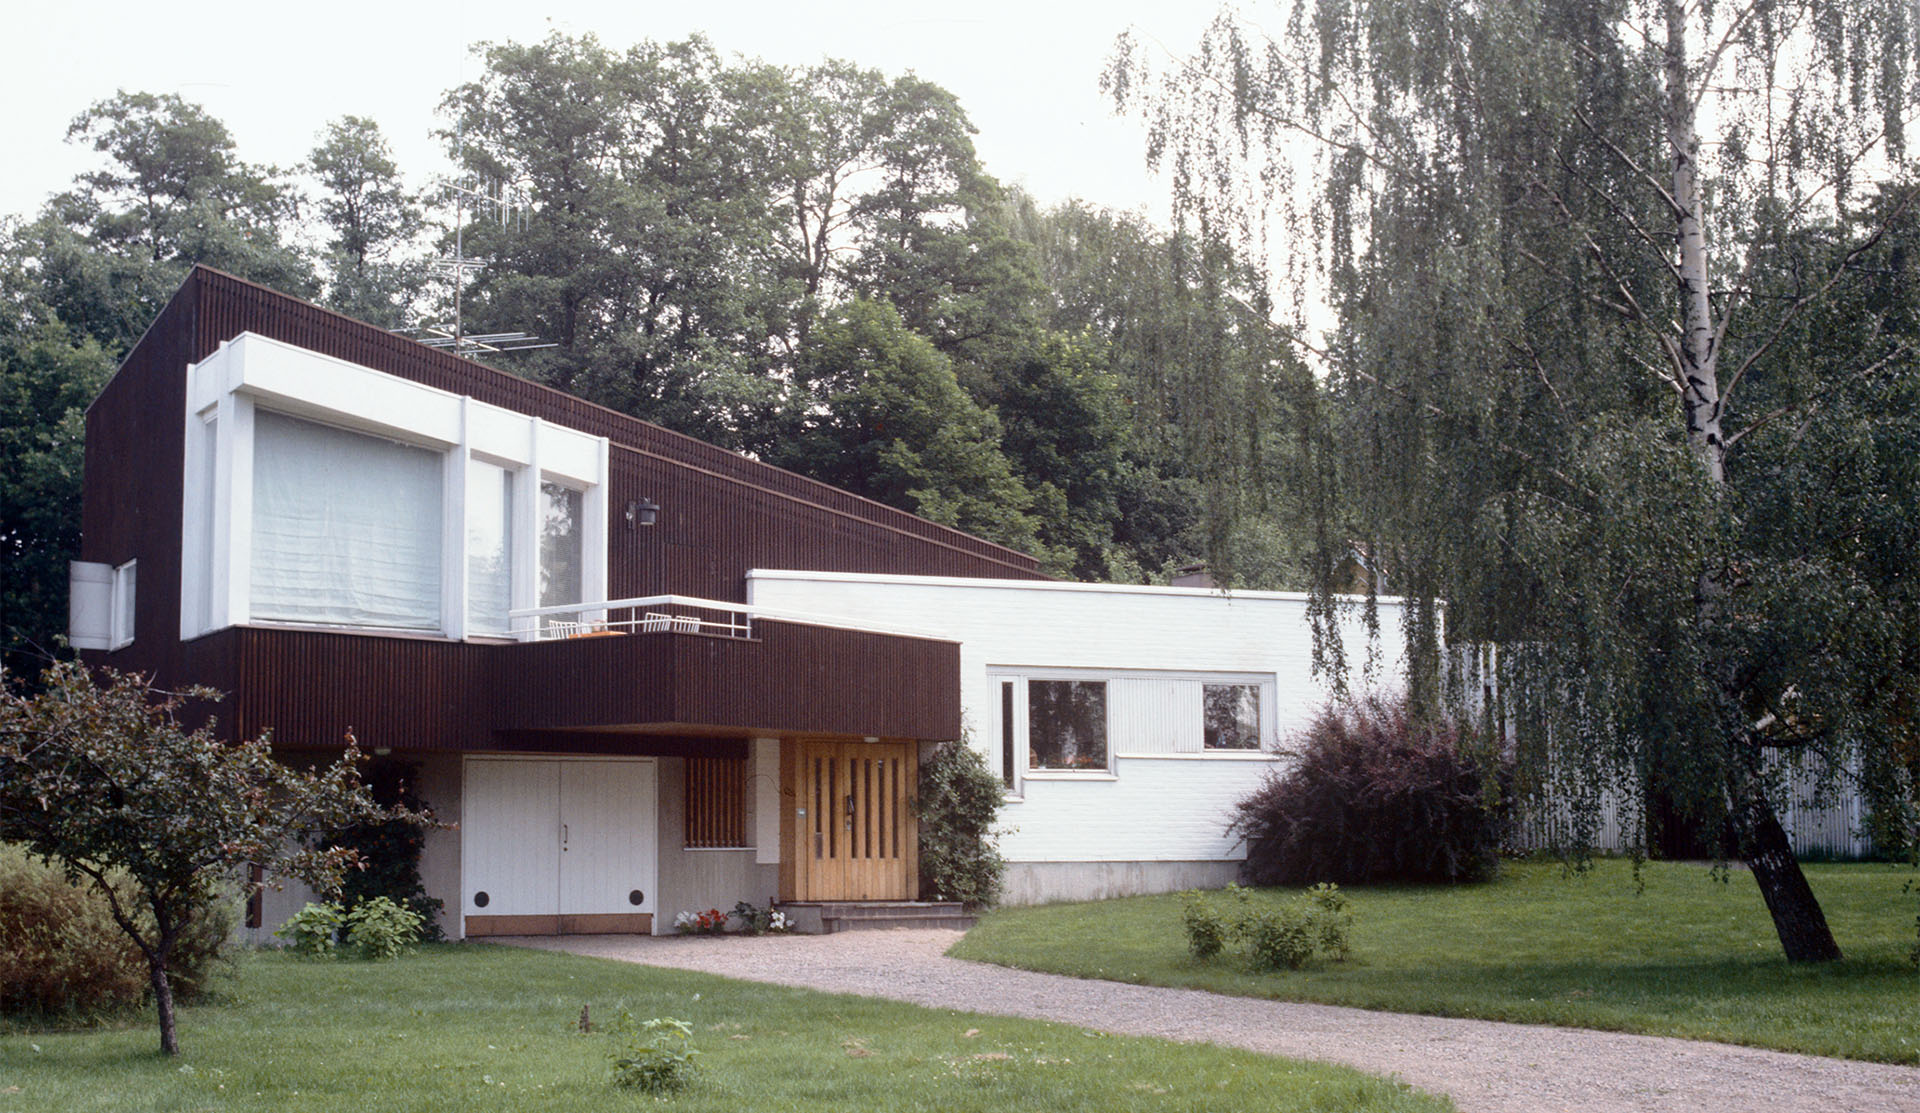 Villa Skeppet in Tammisaari, designed by Alvar Aalto, opens for public ...